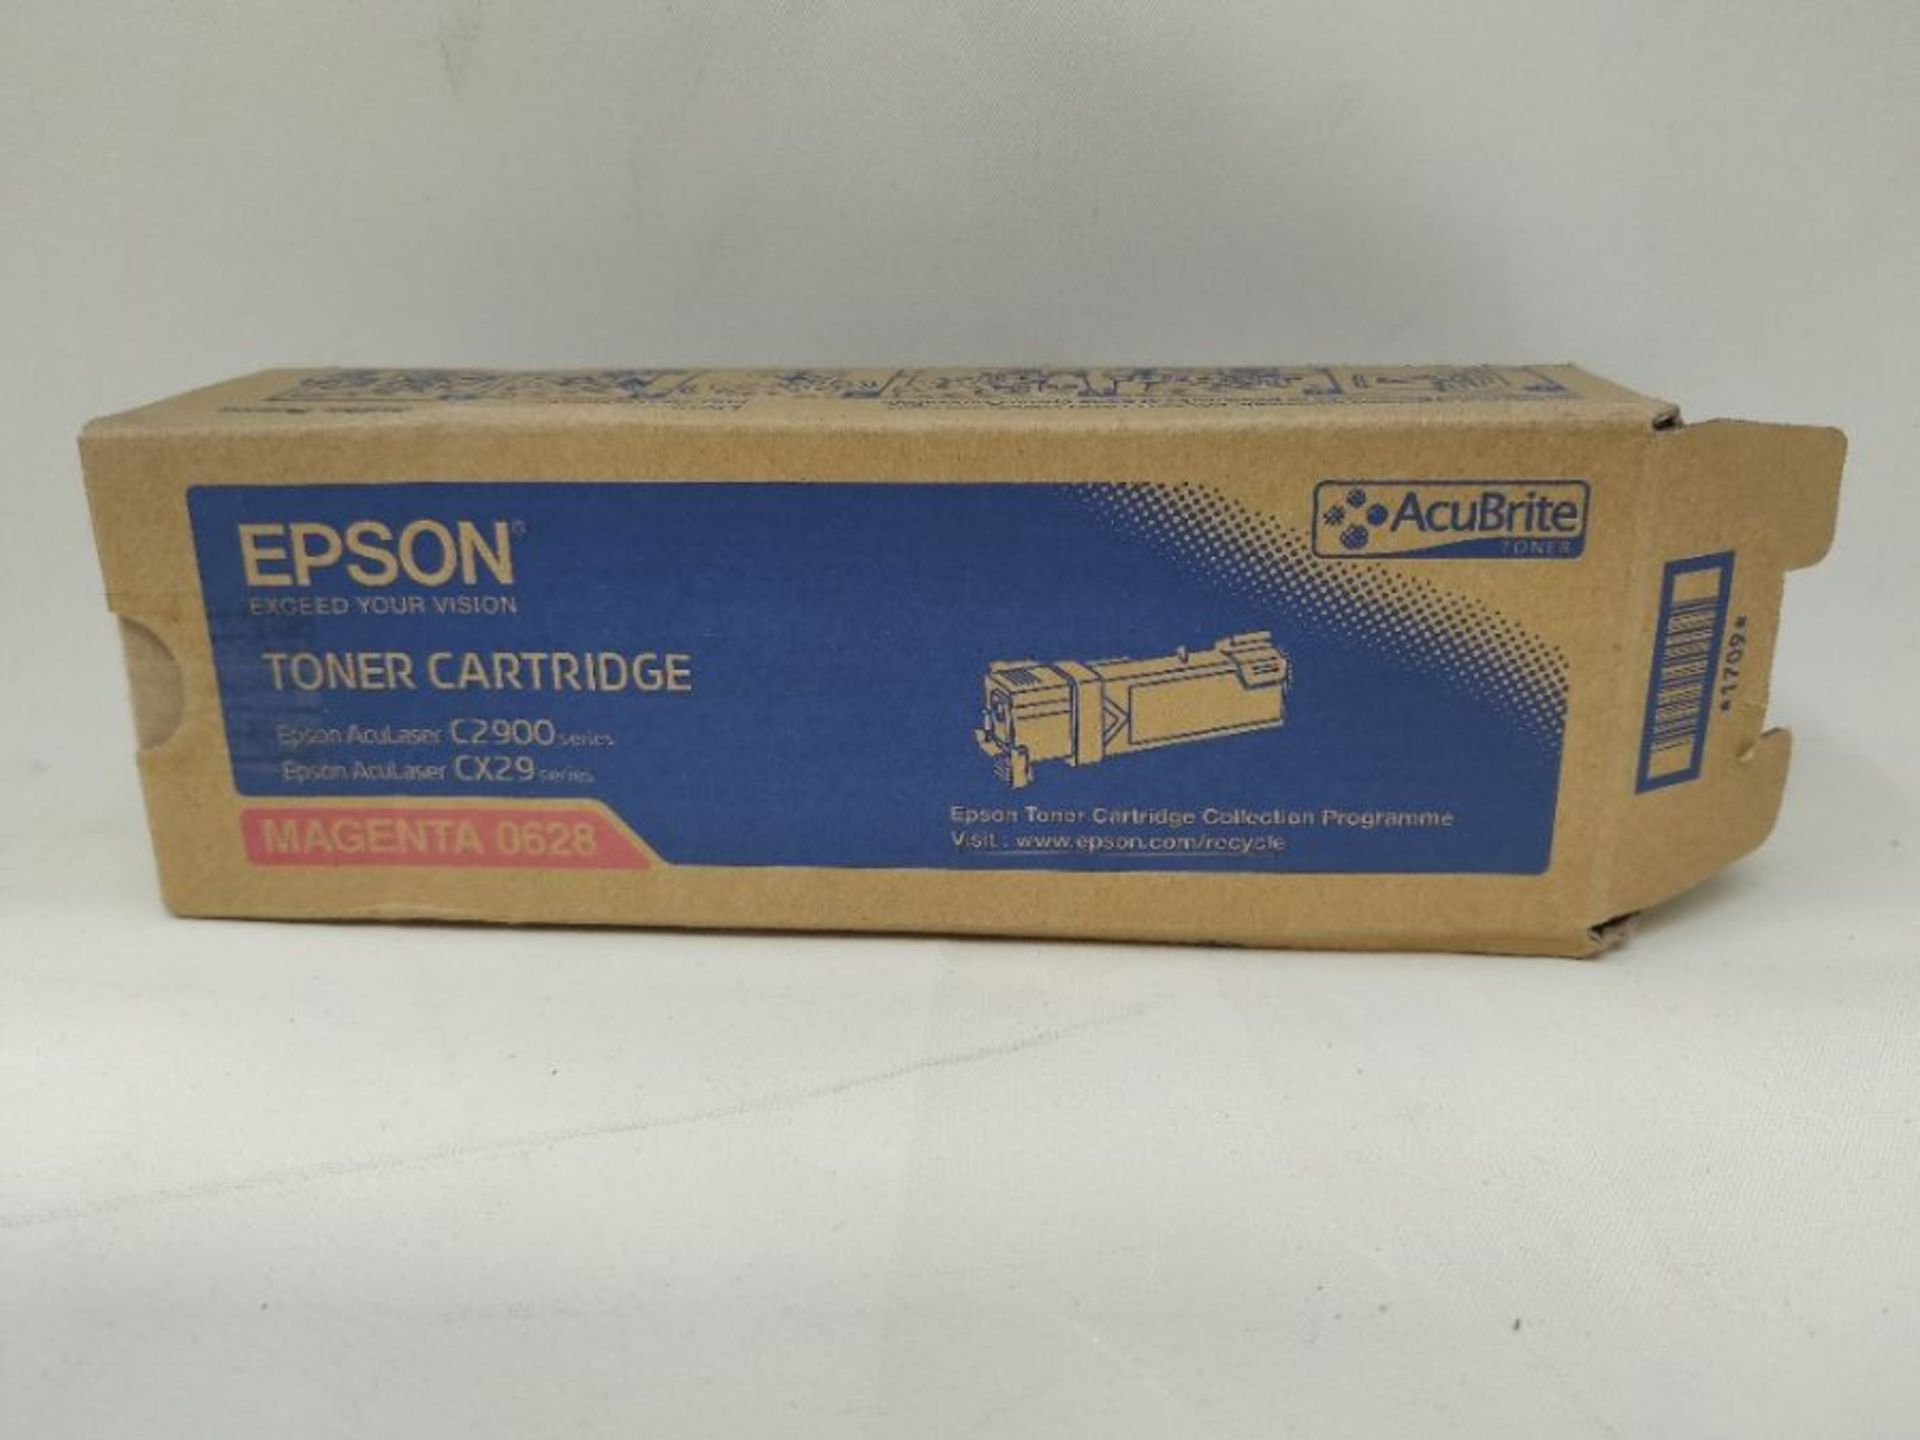 RRP £90.00 Epson Toner Cartridge, Magenta, Genuine - Image 2 of 3